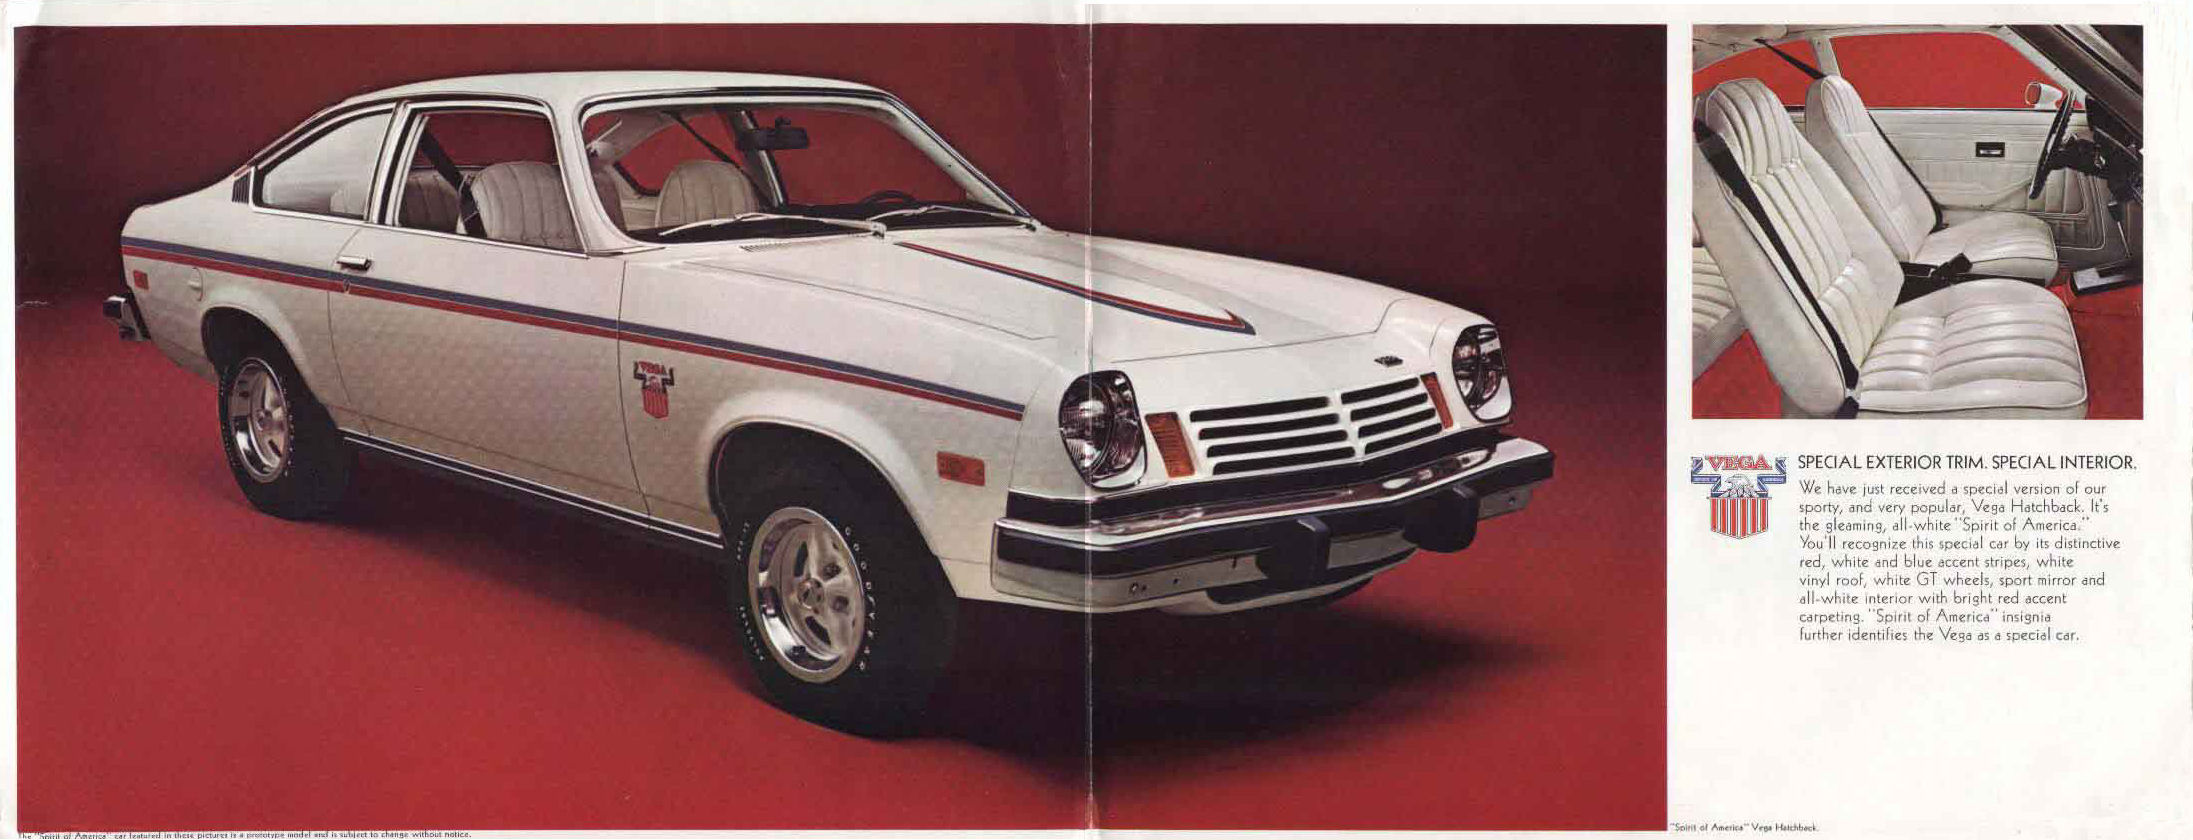 1974 Chevrolet Vega Brochure - Spirit of America Page 2